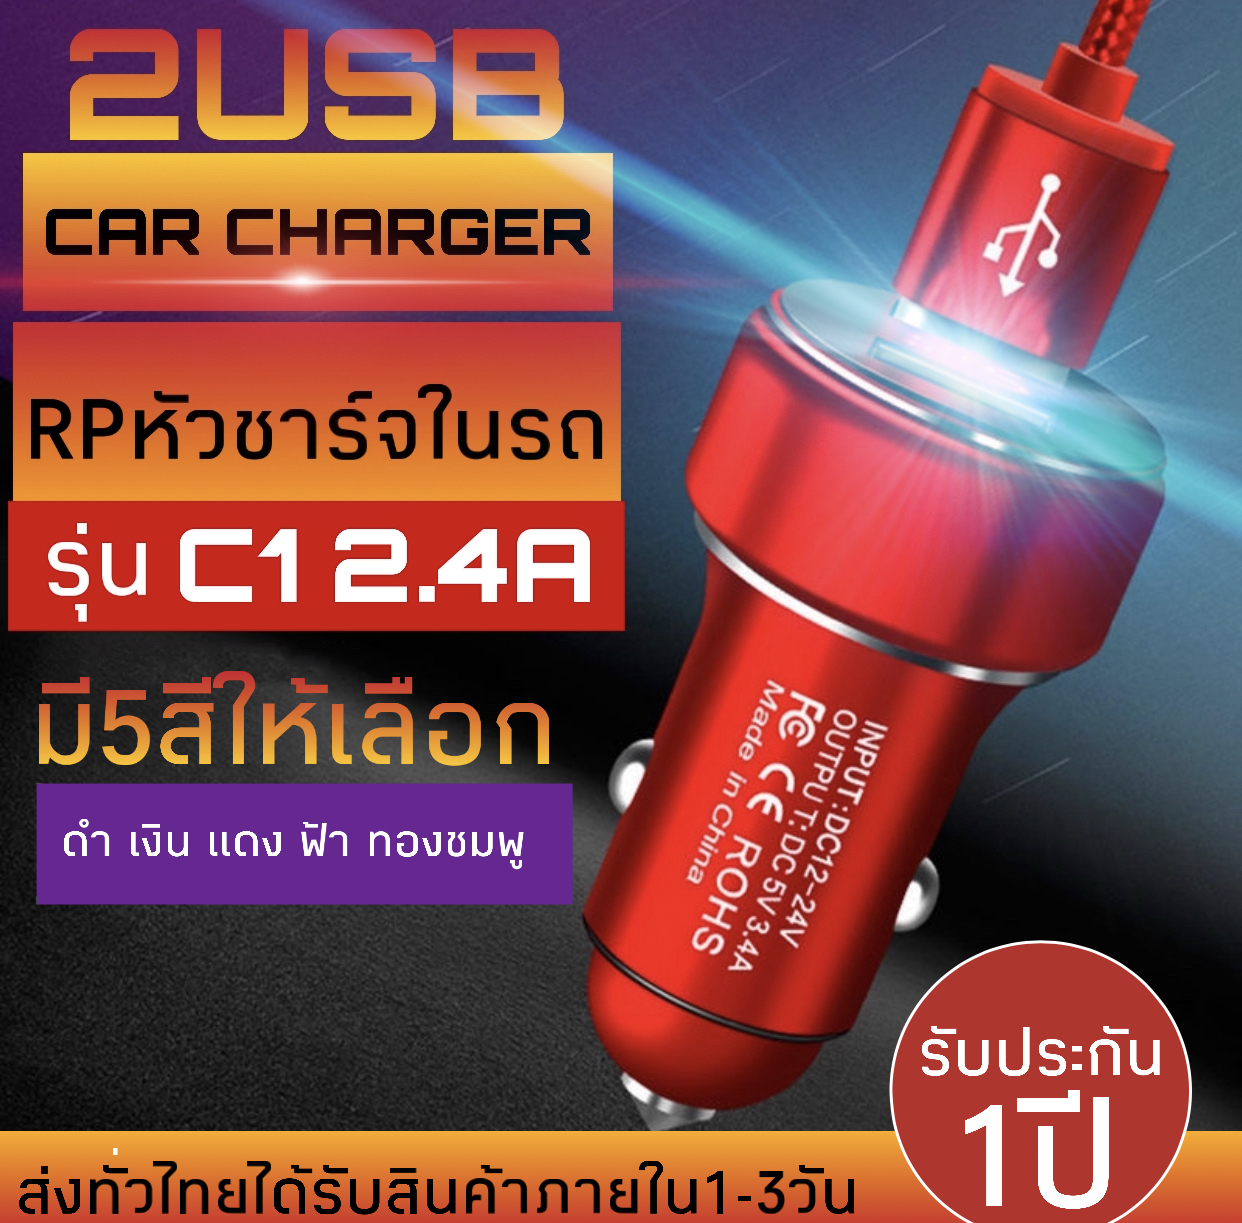 RP Car charger หัวชาร์จรถยนต์ รุ่น C1 ชาร์จเร็ว จ่ายไฟเต็ม100% พอร์ต USB เเบบคู่ สามารถชาร์จพร้อมกันได้ 2 เครื่อง ของแท้ รับประกัน1ปี BY RP GROUP